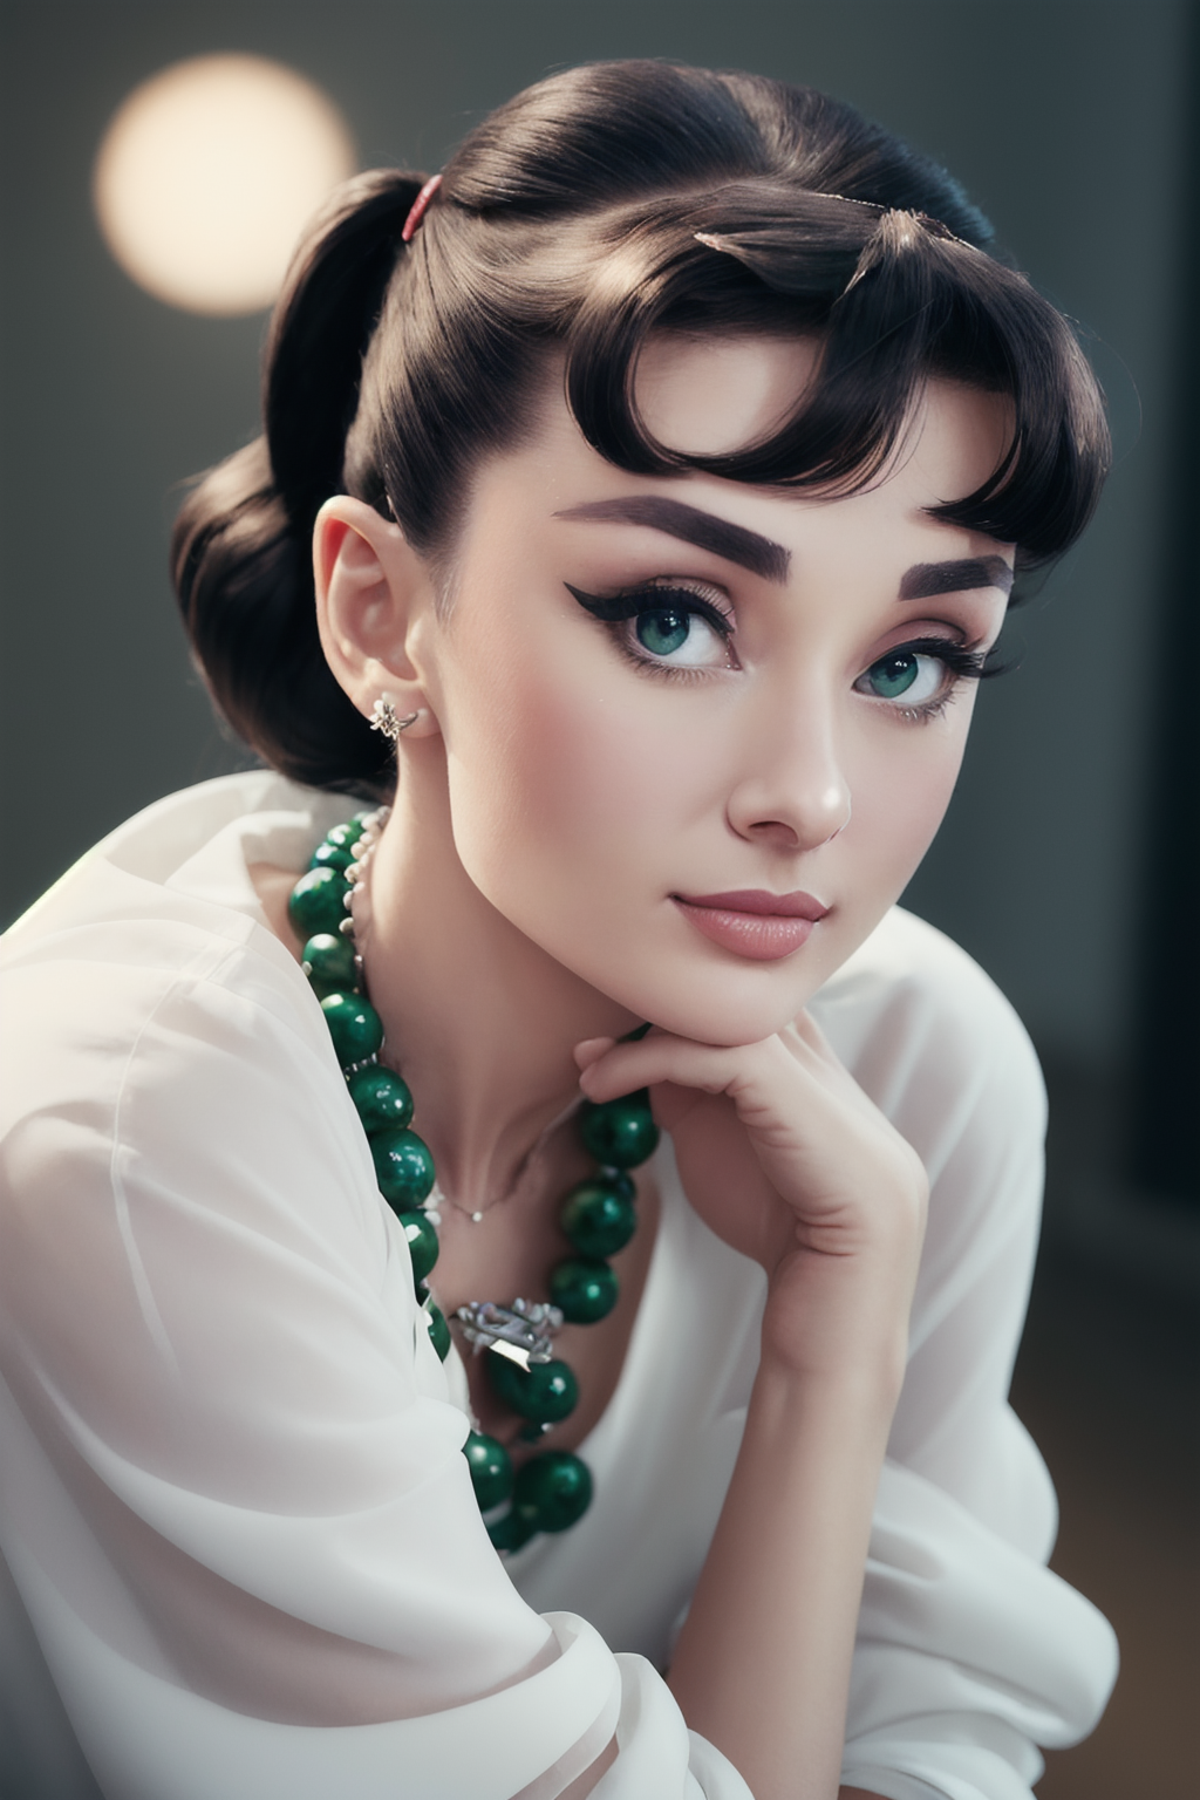 Audrey Hepburn image by Wiggin